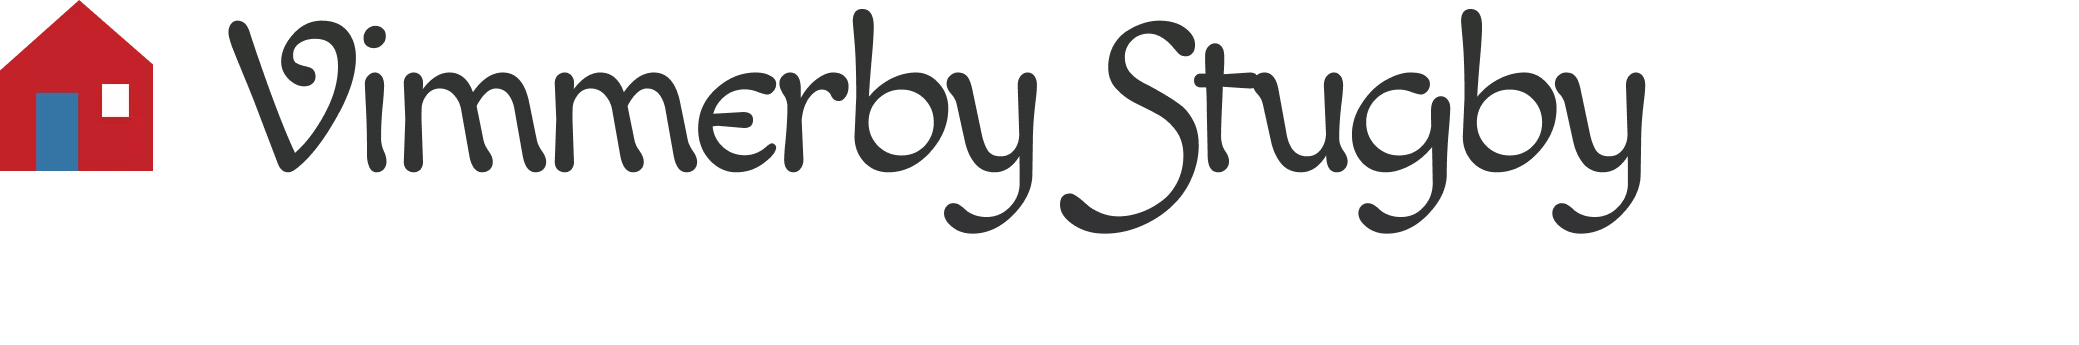 vimmerby stugby logo